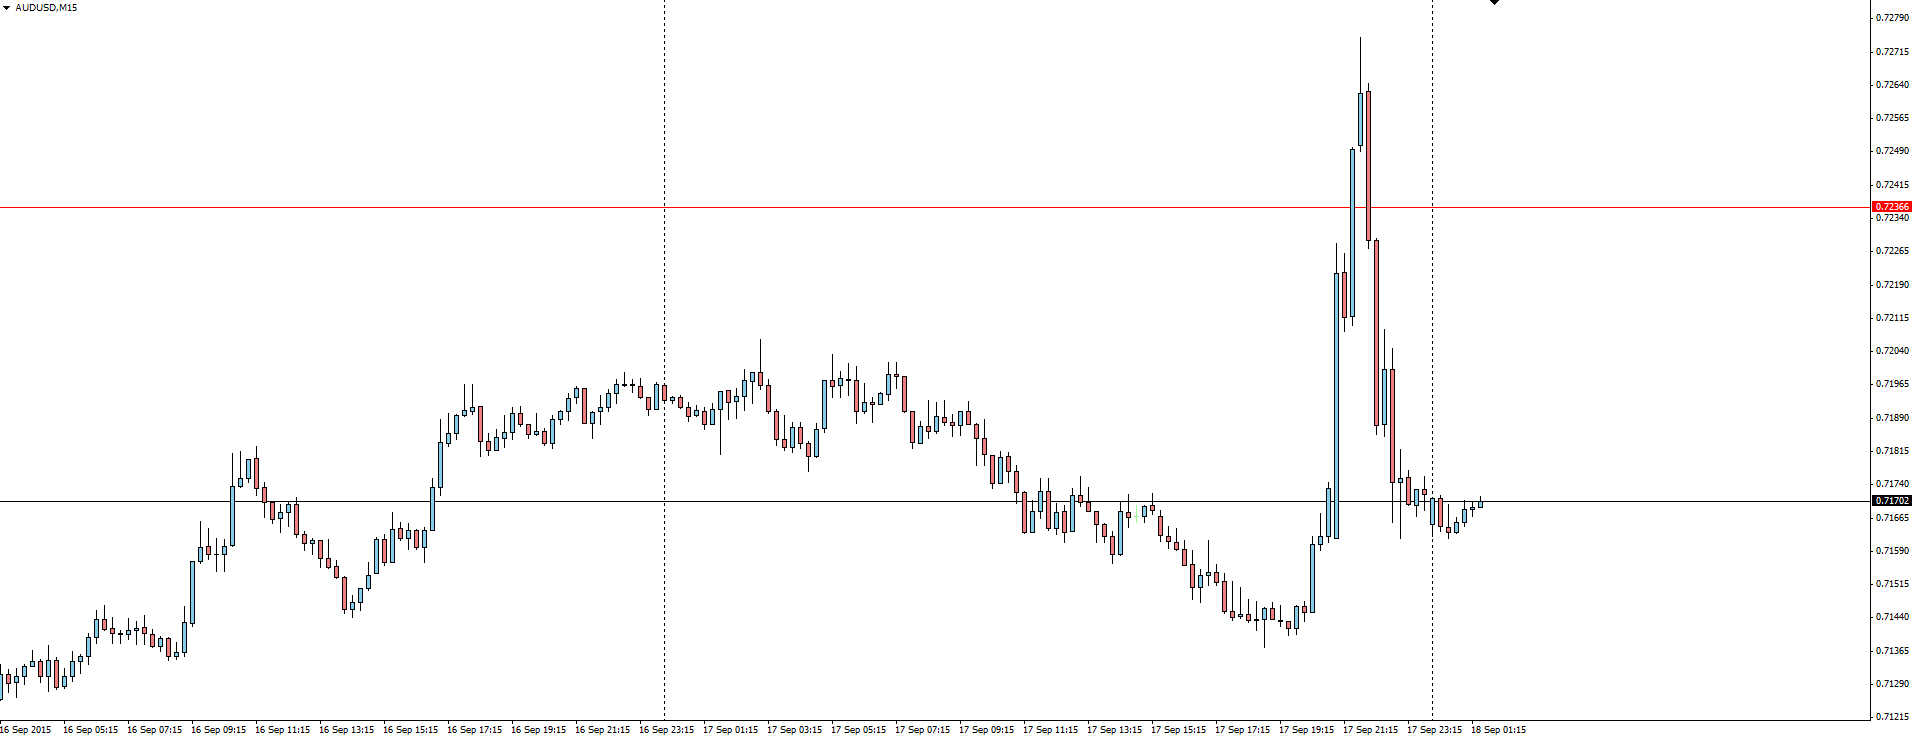 AUD/USD 15 Minute Chart